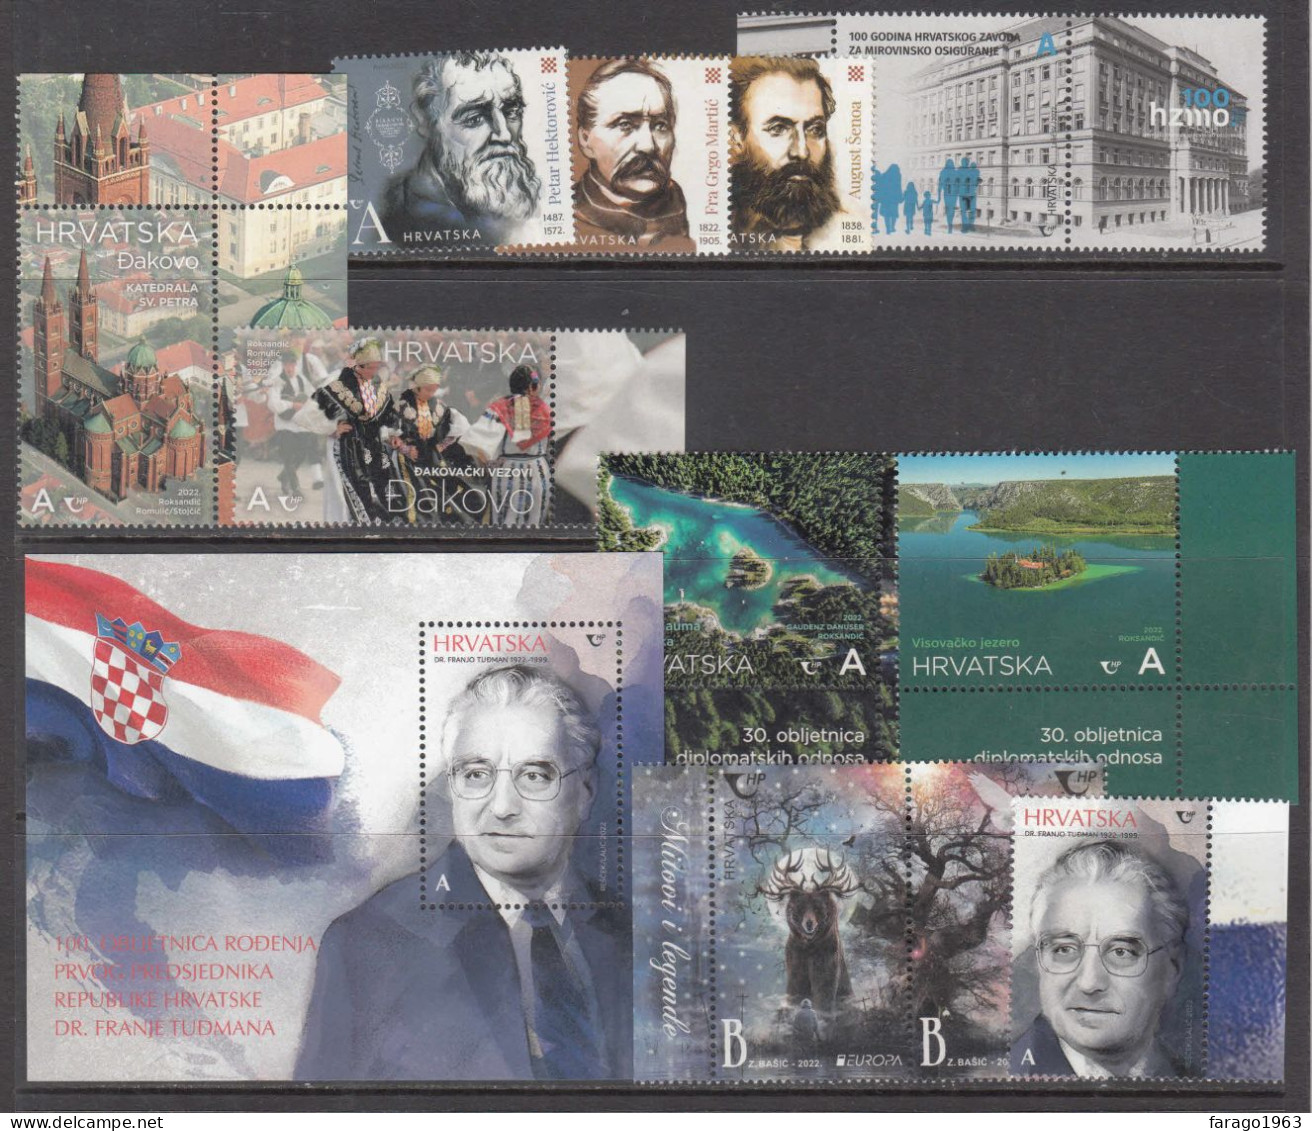 2022 Croatia Apr - Jun Issues 11 Stamps + 1 Sheet Well Below Face Value MNH - Croatia